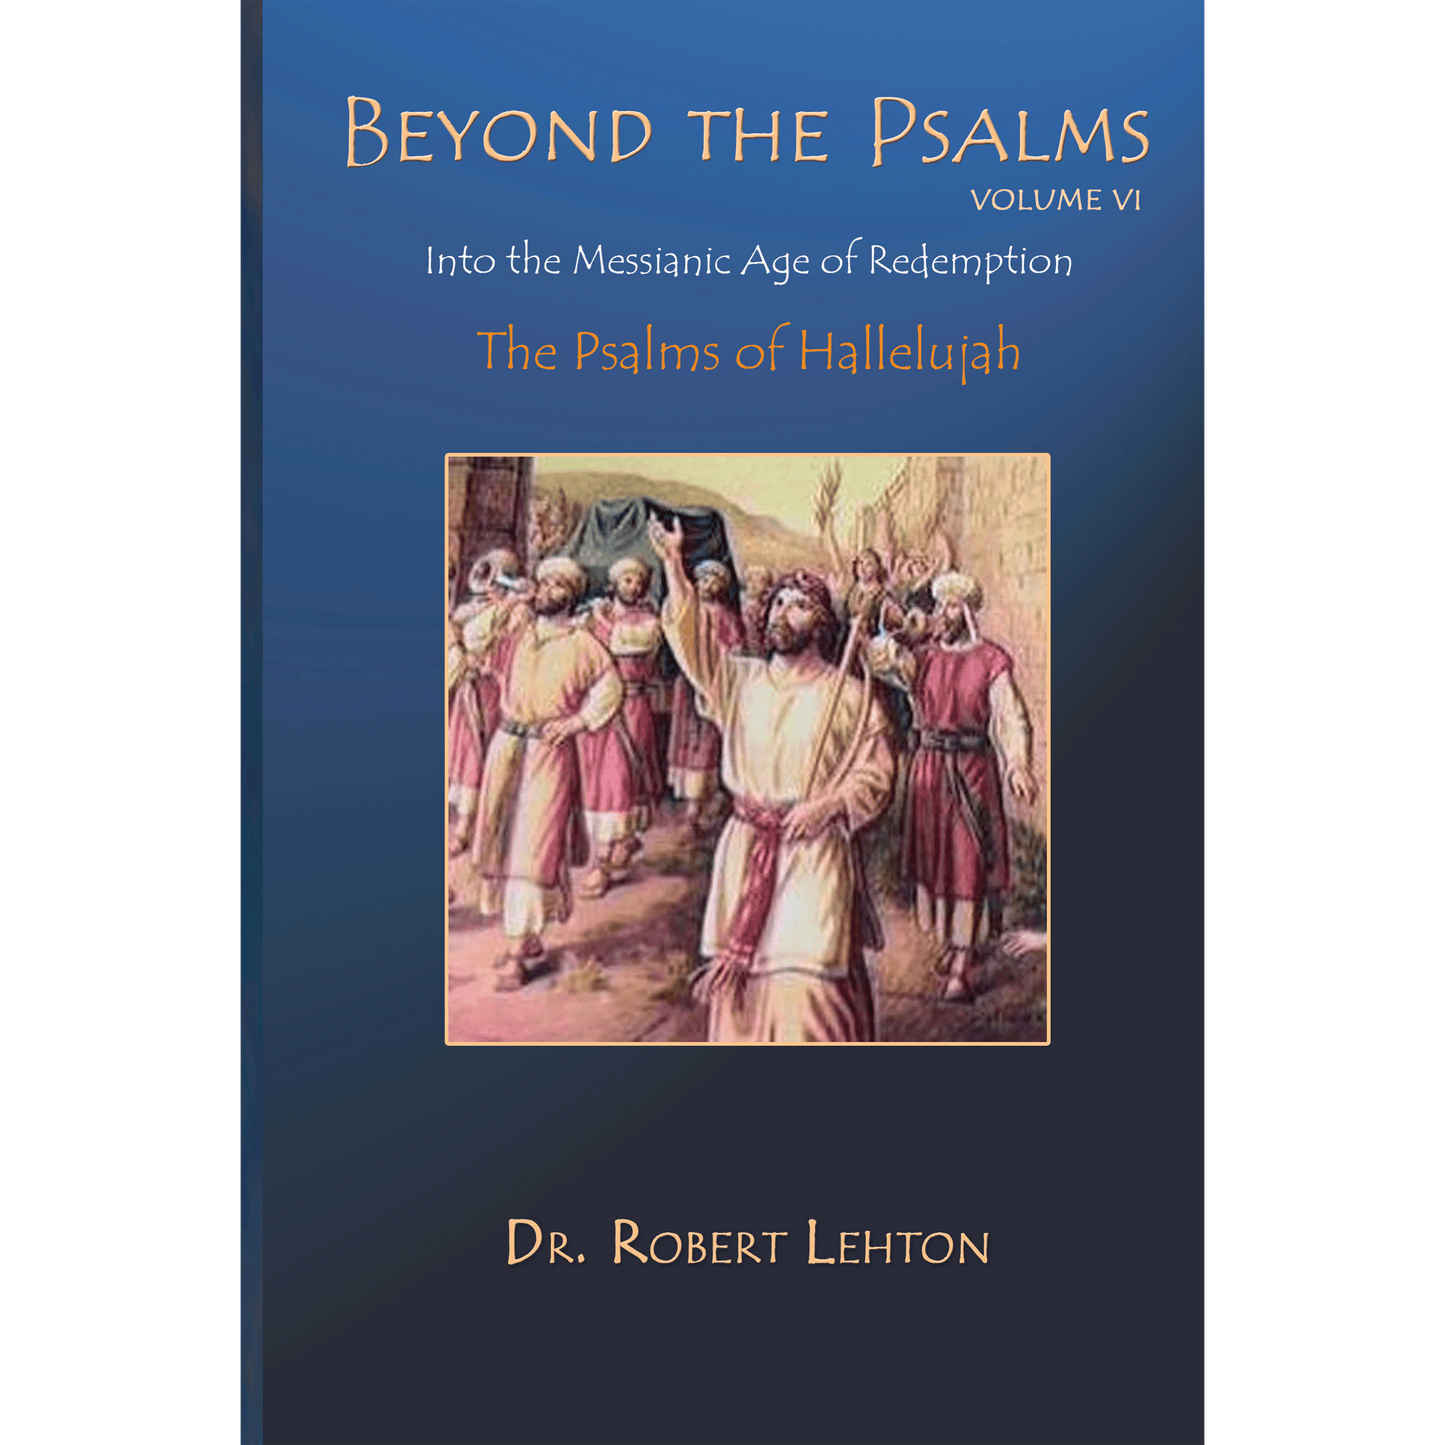 Beyond the Psalms Vol. 6